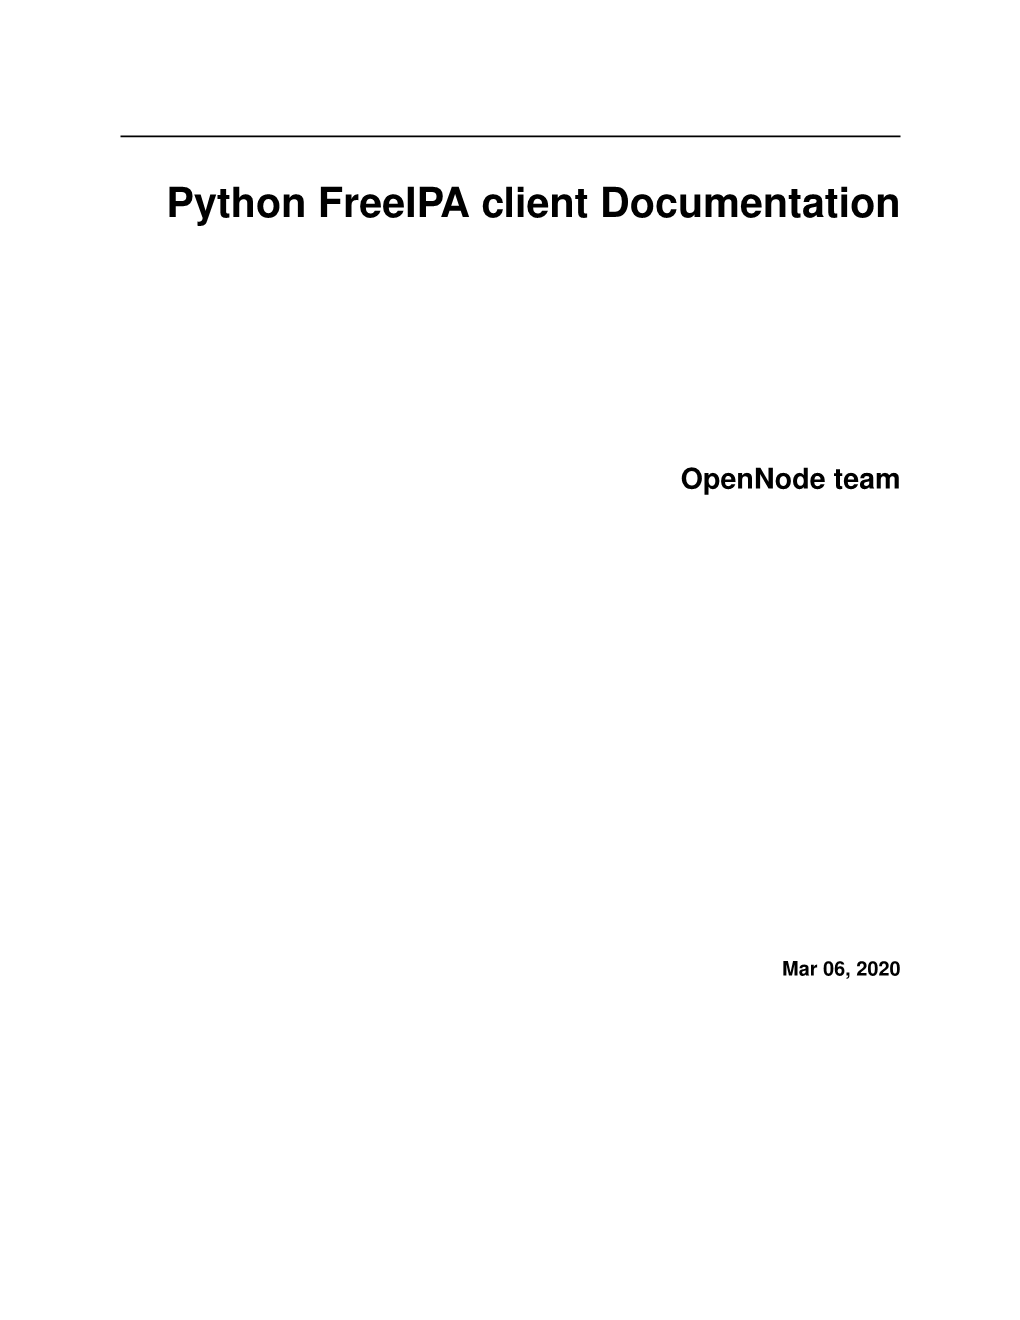 Python Freeipa Client Documentation